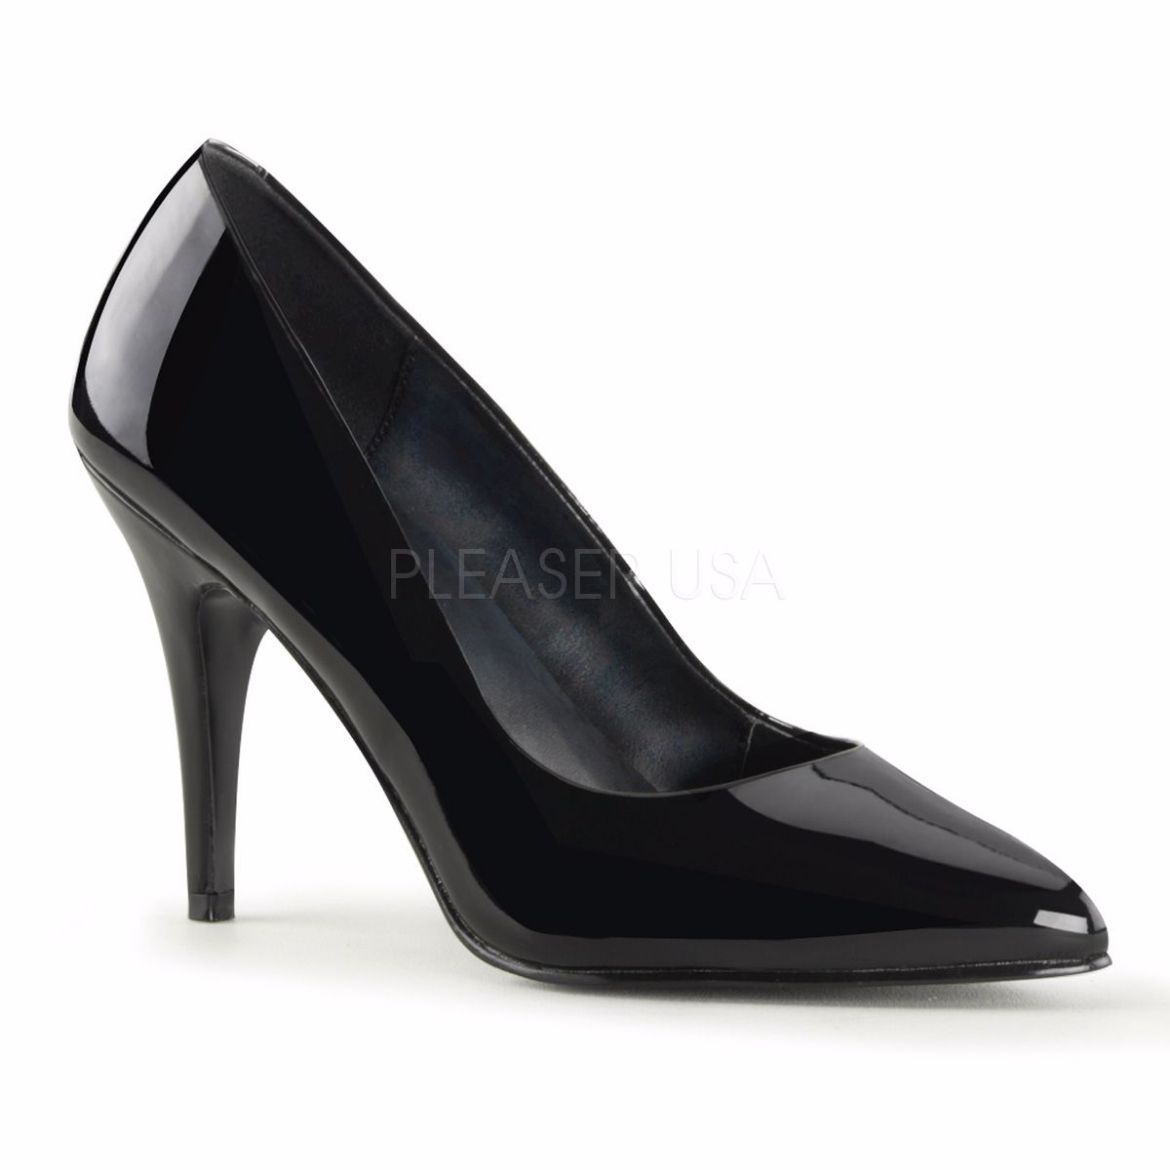 Product image of Pleaser Vanity-420 Black Patent, 4 inch (10.2 cm) Heel Court Pump Shoes